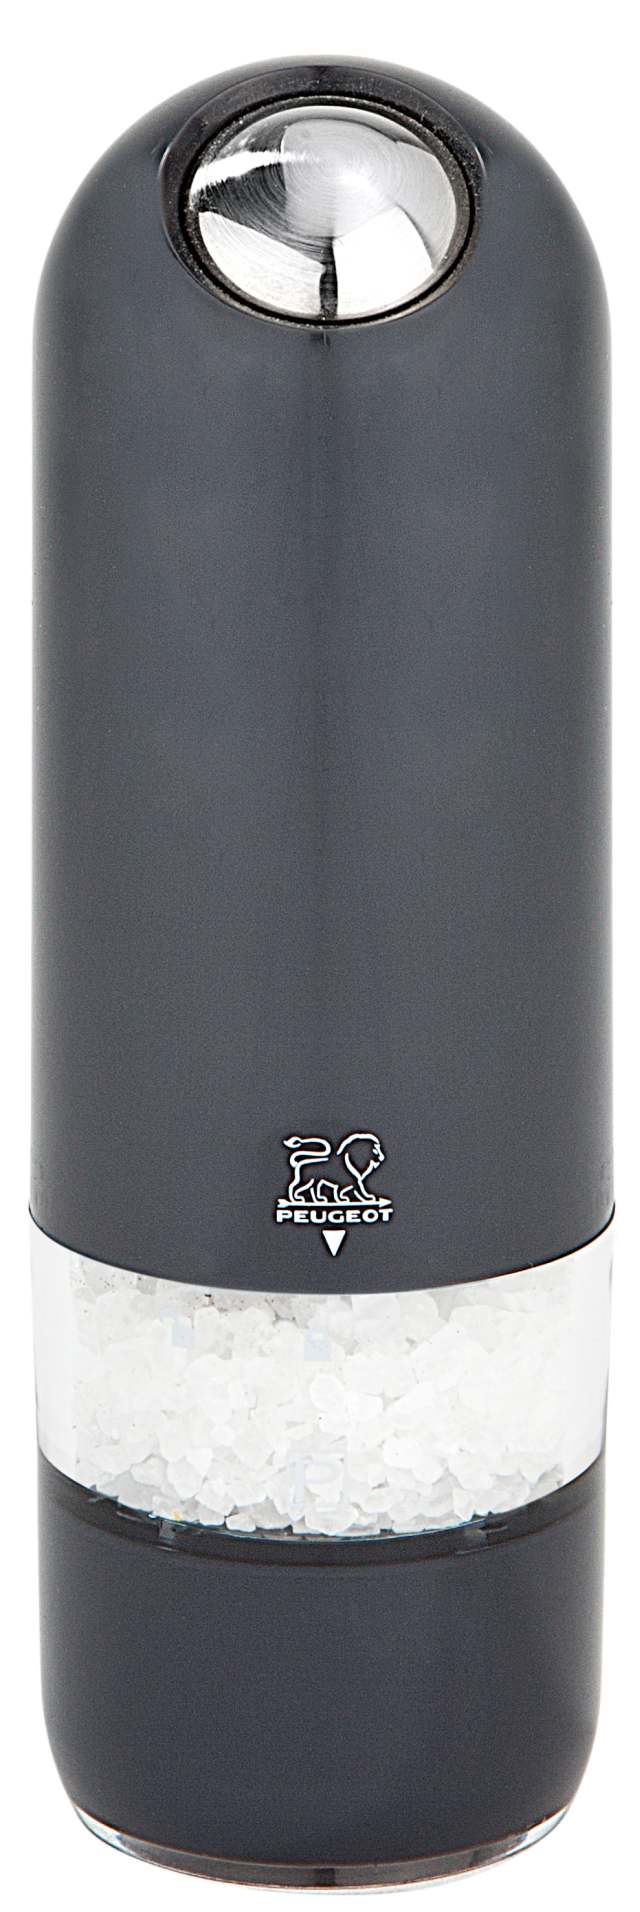 Foto Peugeot Molinillo de sal, eléctrico ALASKA gris cuarzo, 17 cm, con lu